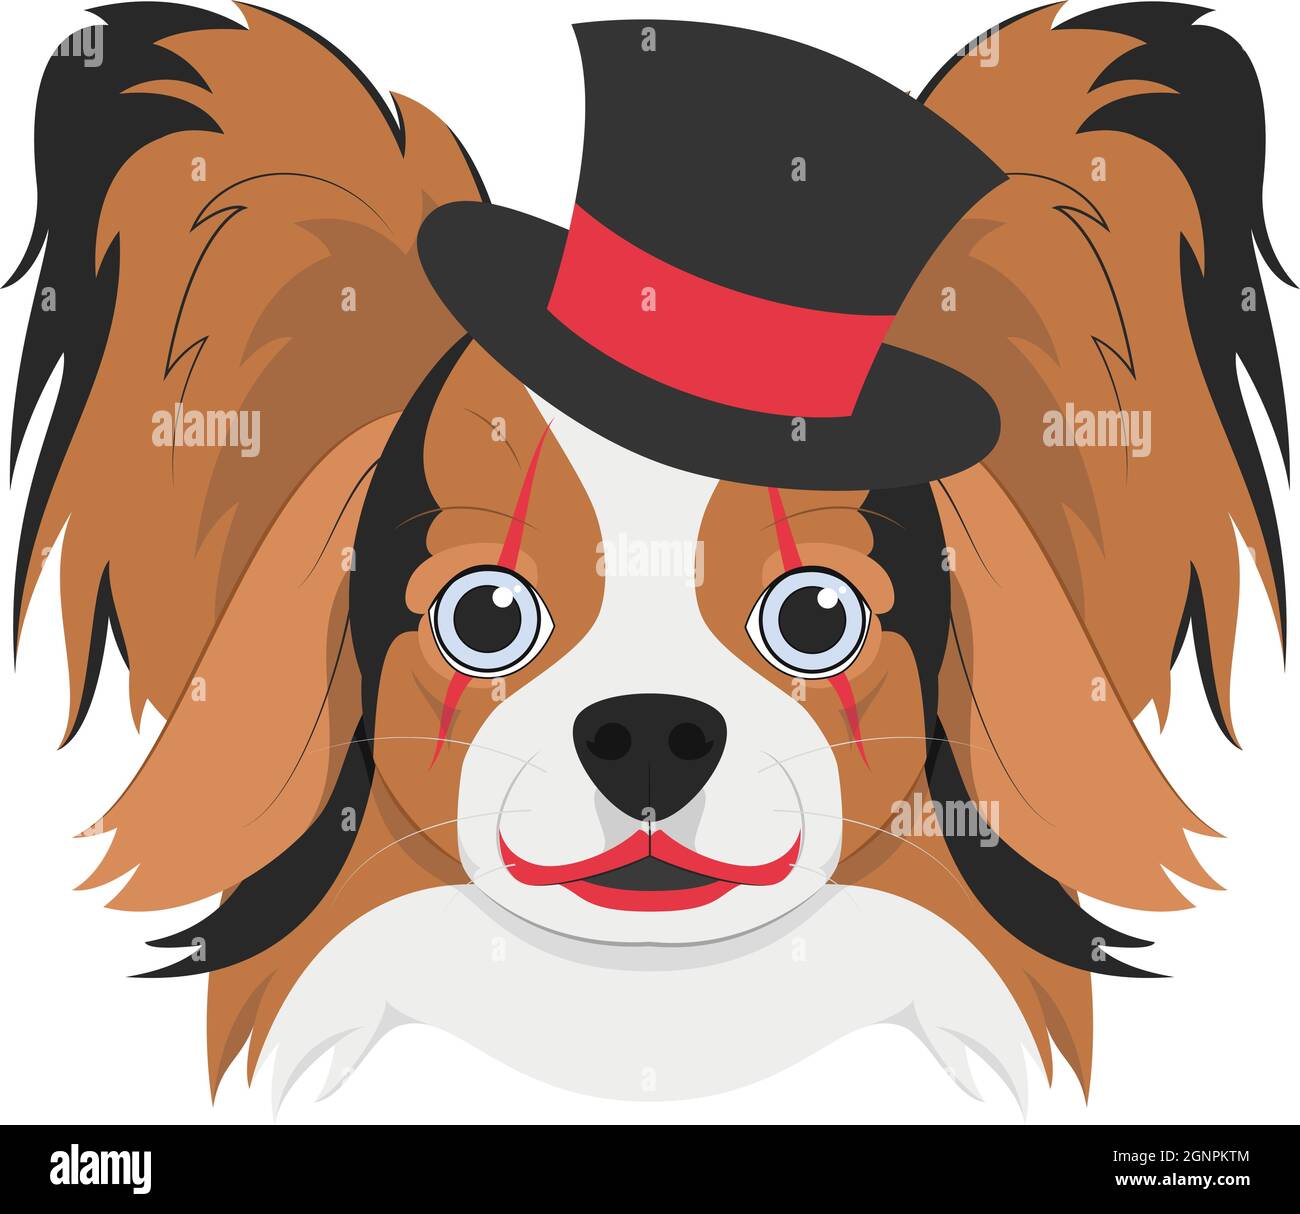 Halloween greeting card. Papillon dog with top hat and clown makeup Stock Vector